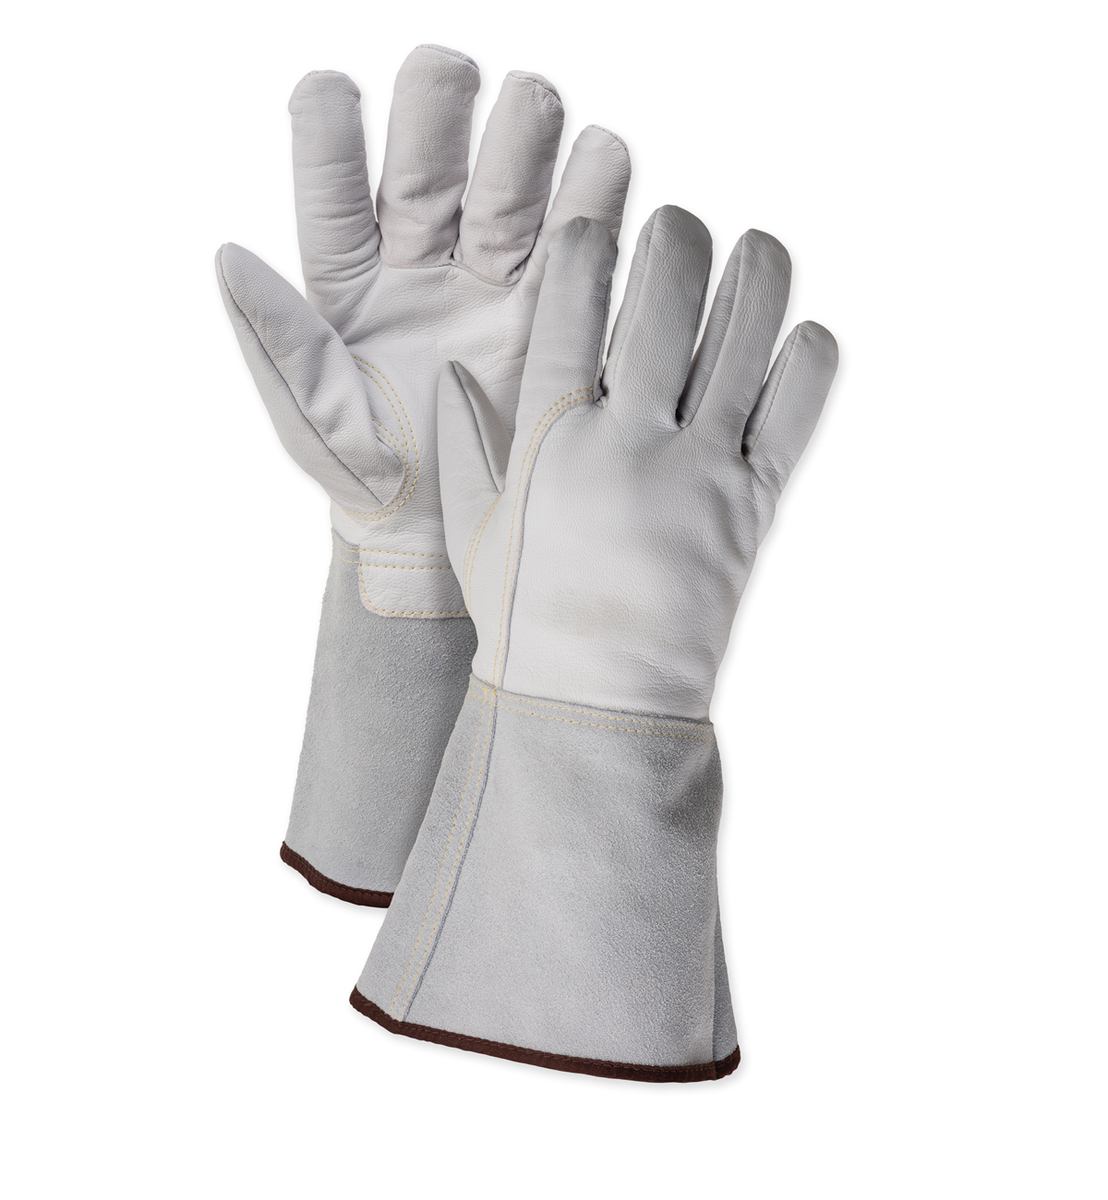 Wells Lamont 2X Goatskin Cut Resistant Gloves